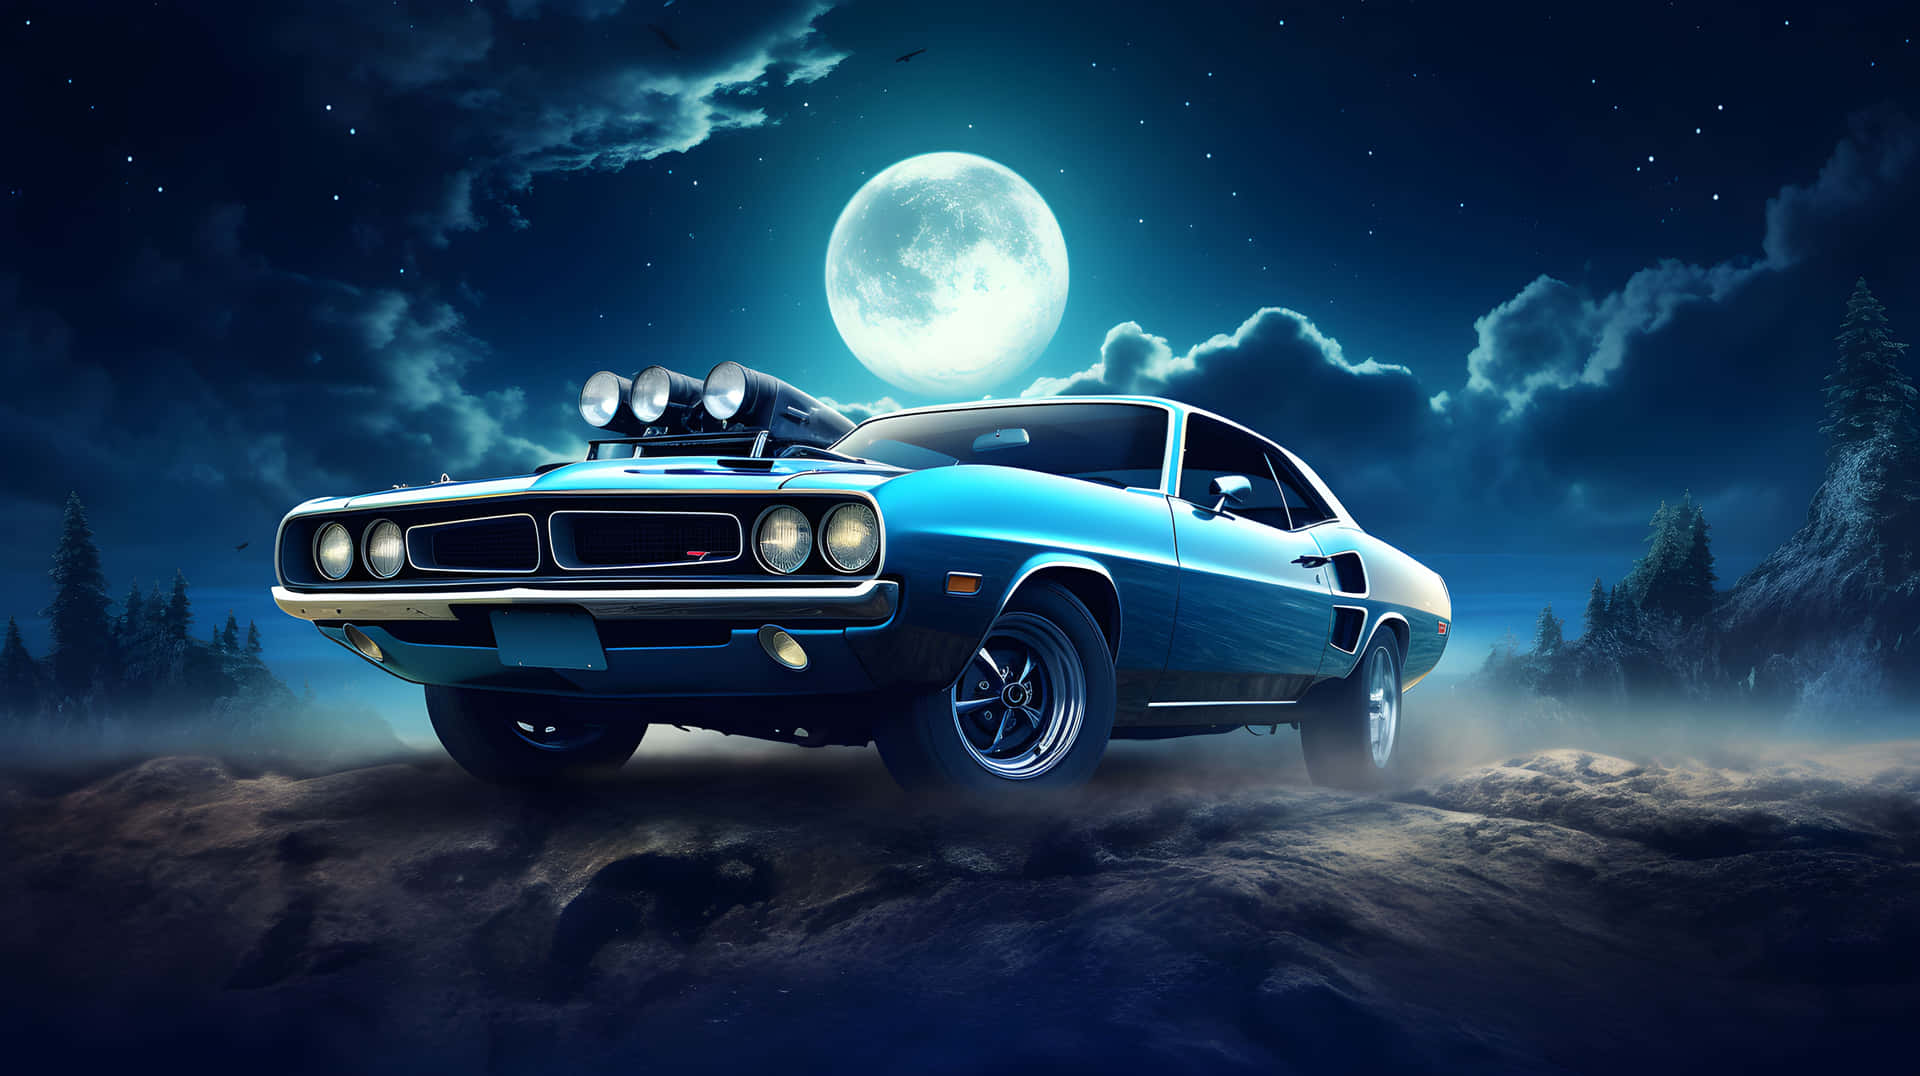 Muscle Car Moonlight Drive.jpg Wallpaper